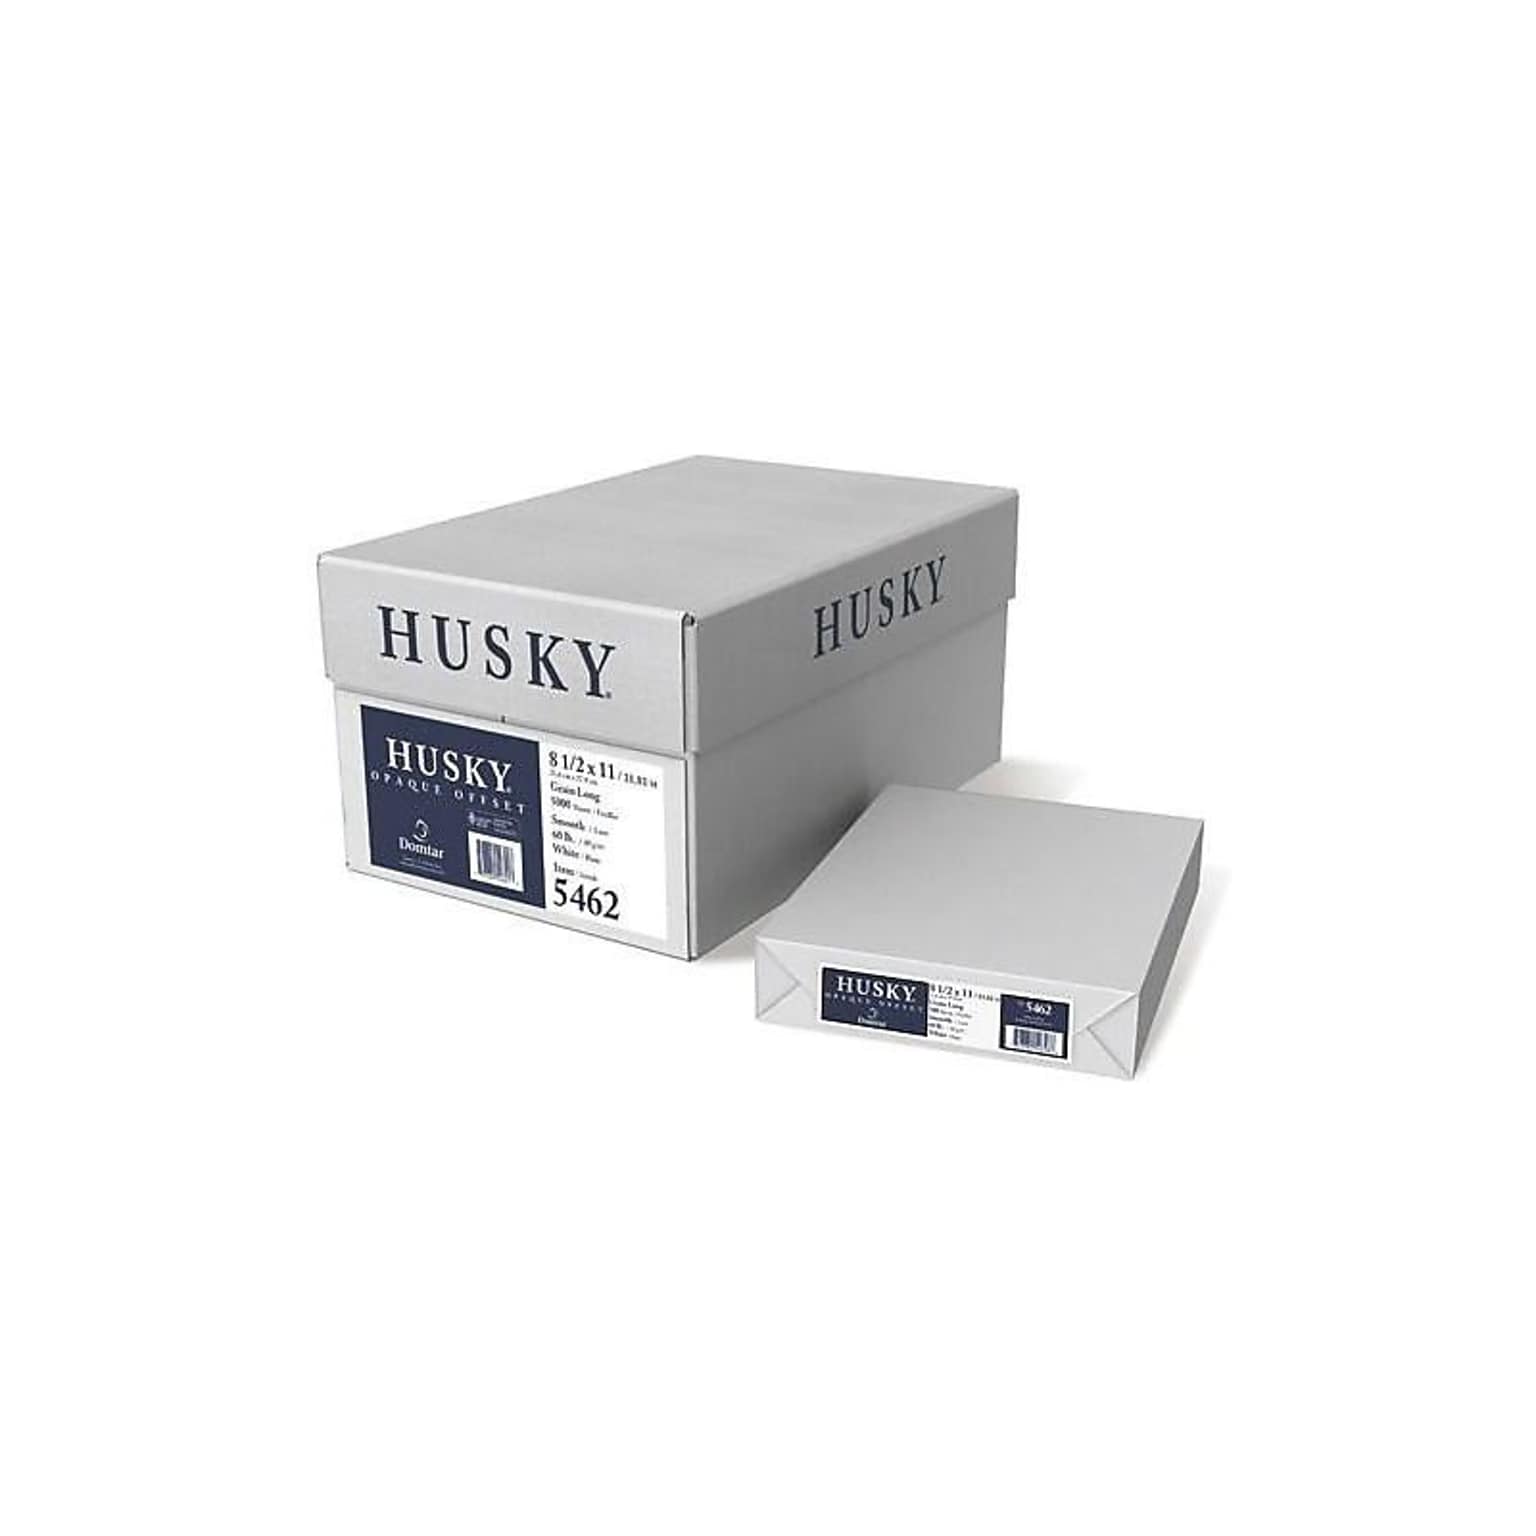 Domtar Husky Opaque Offset 8.5 x 11 Multipurpose Paper, 60 lbs., 94 Brightness, 500/Ream, 10 Reams/Carton (5462)